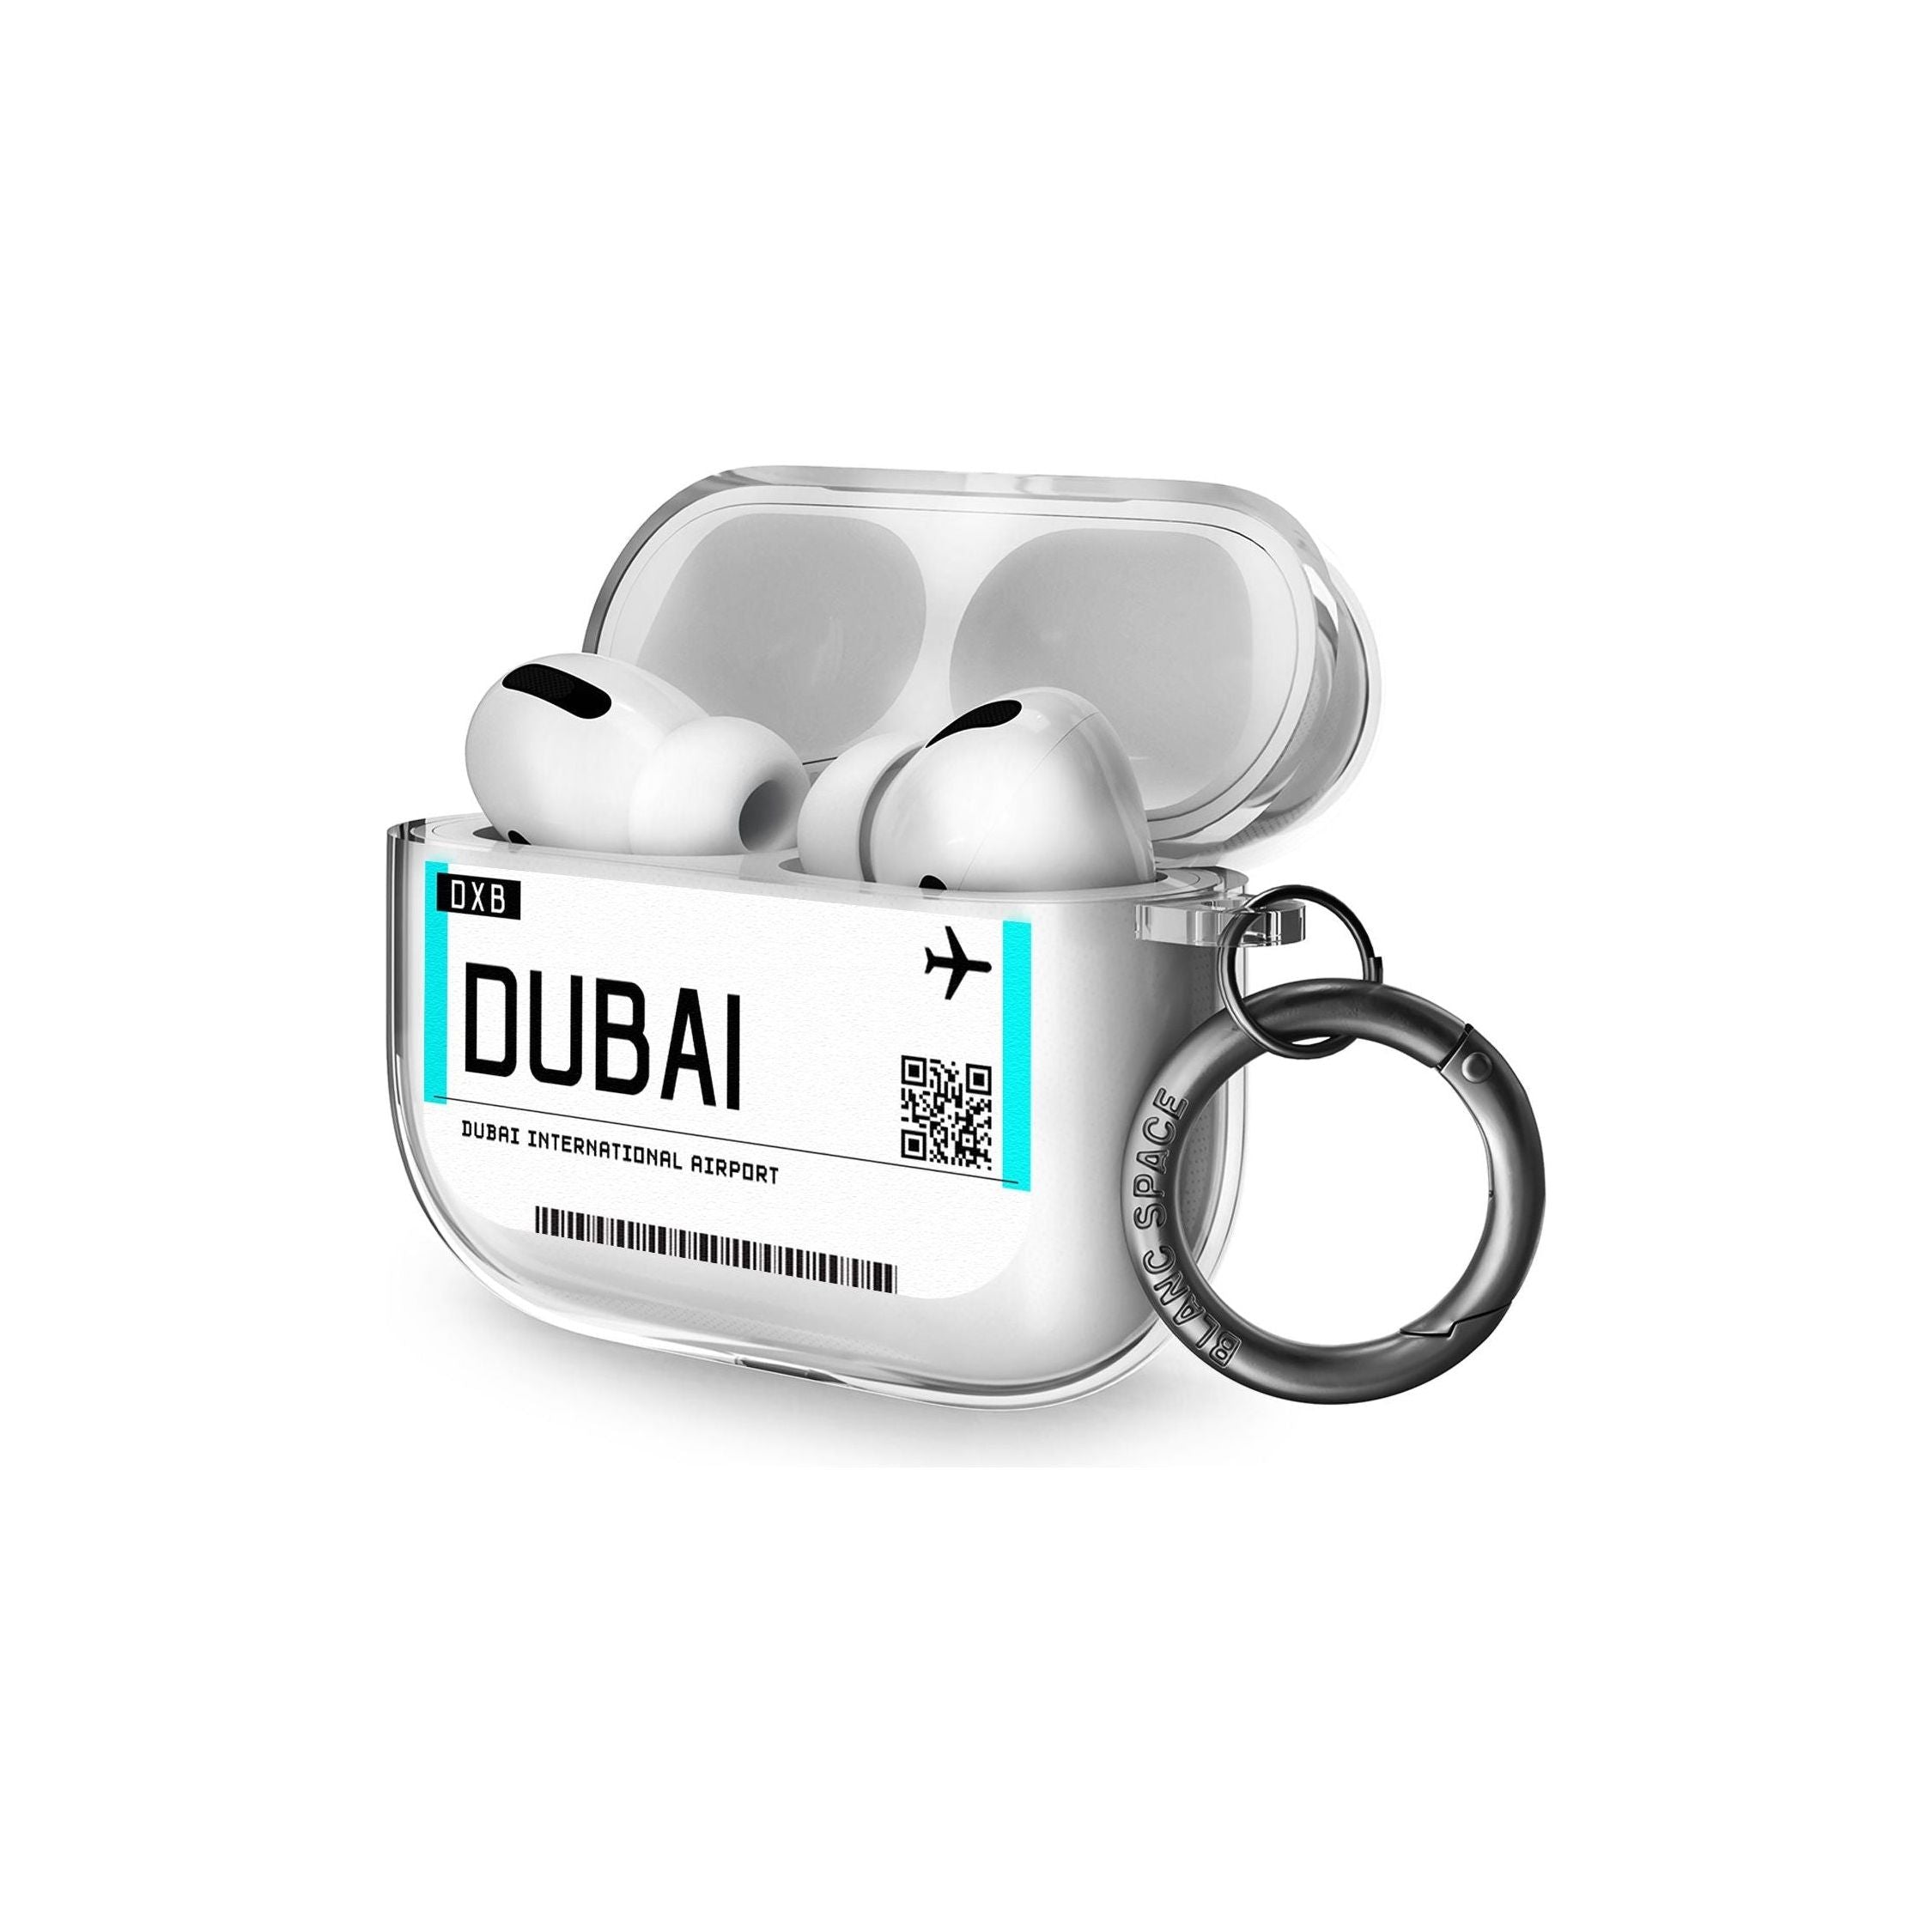 Dubai Boarding Pass Airpods Pro Case